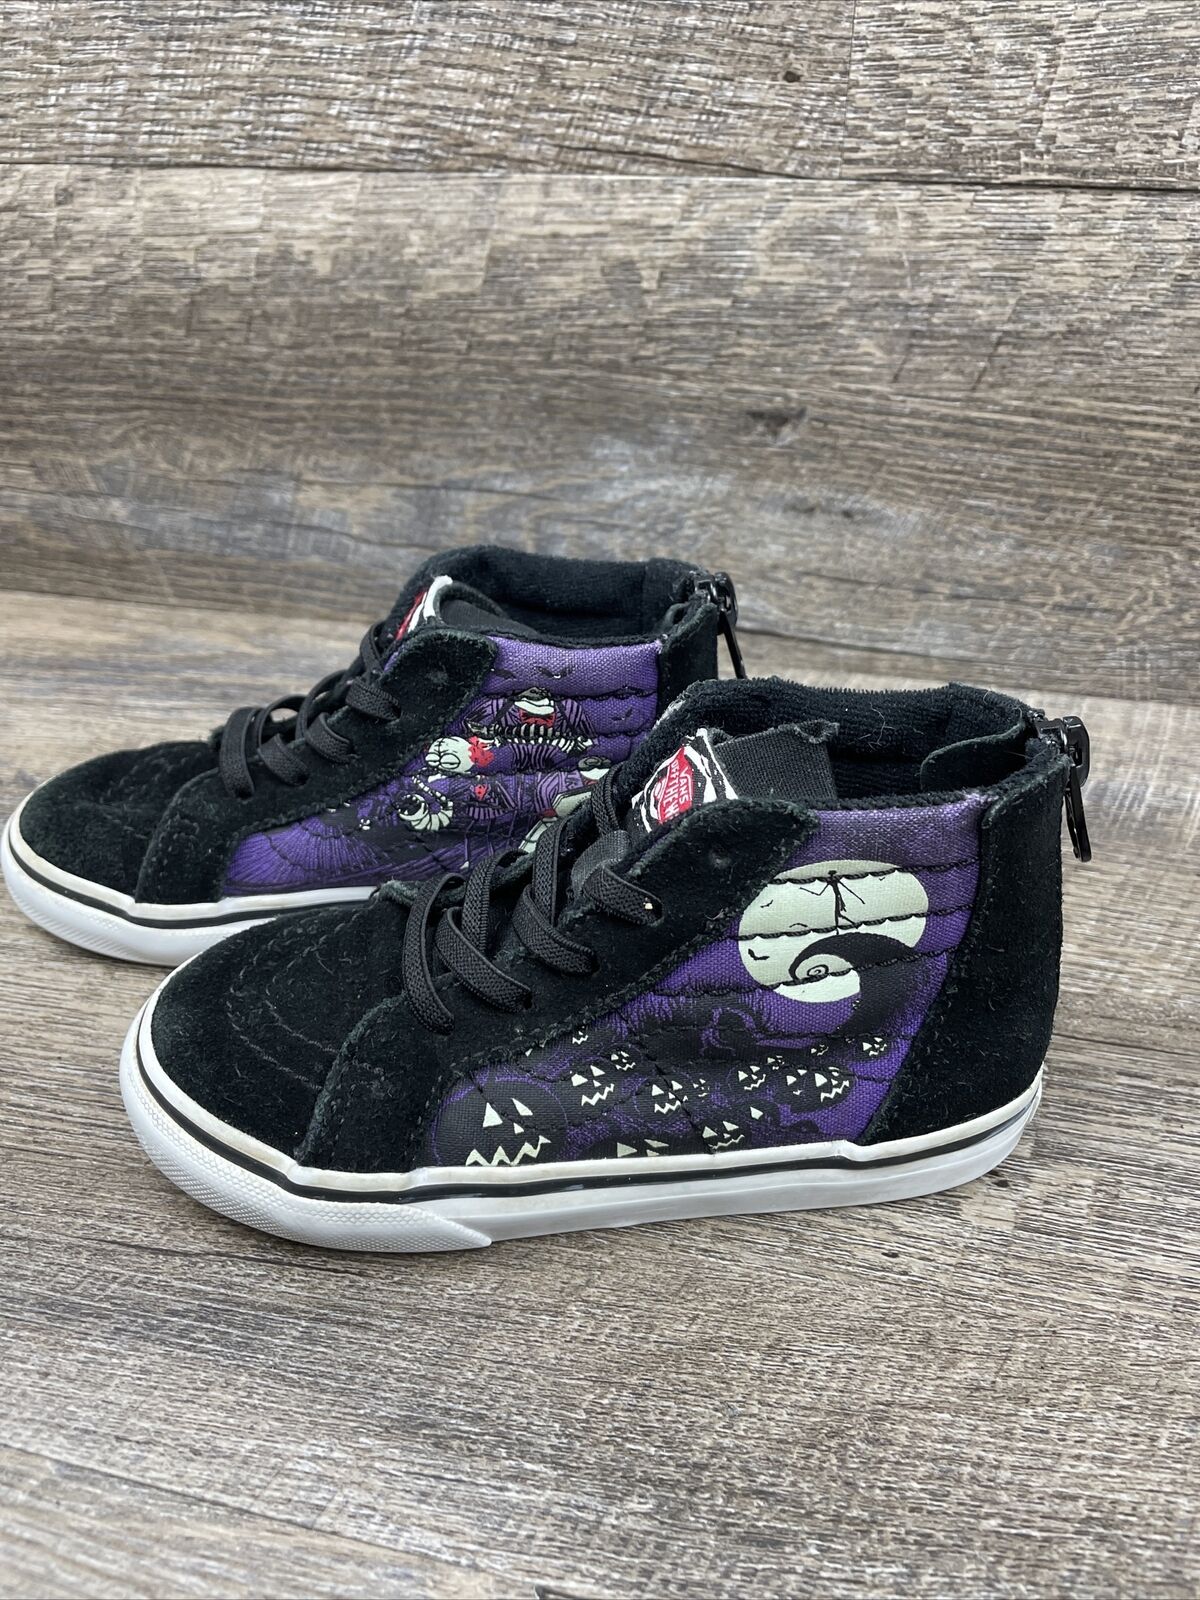 VANS Kids Disney The Nightmare Before Christmas Lace Up Black Purple Shoes Sz 9